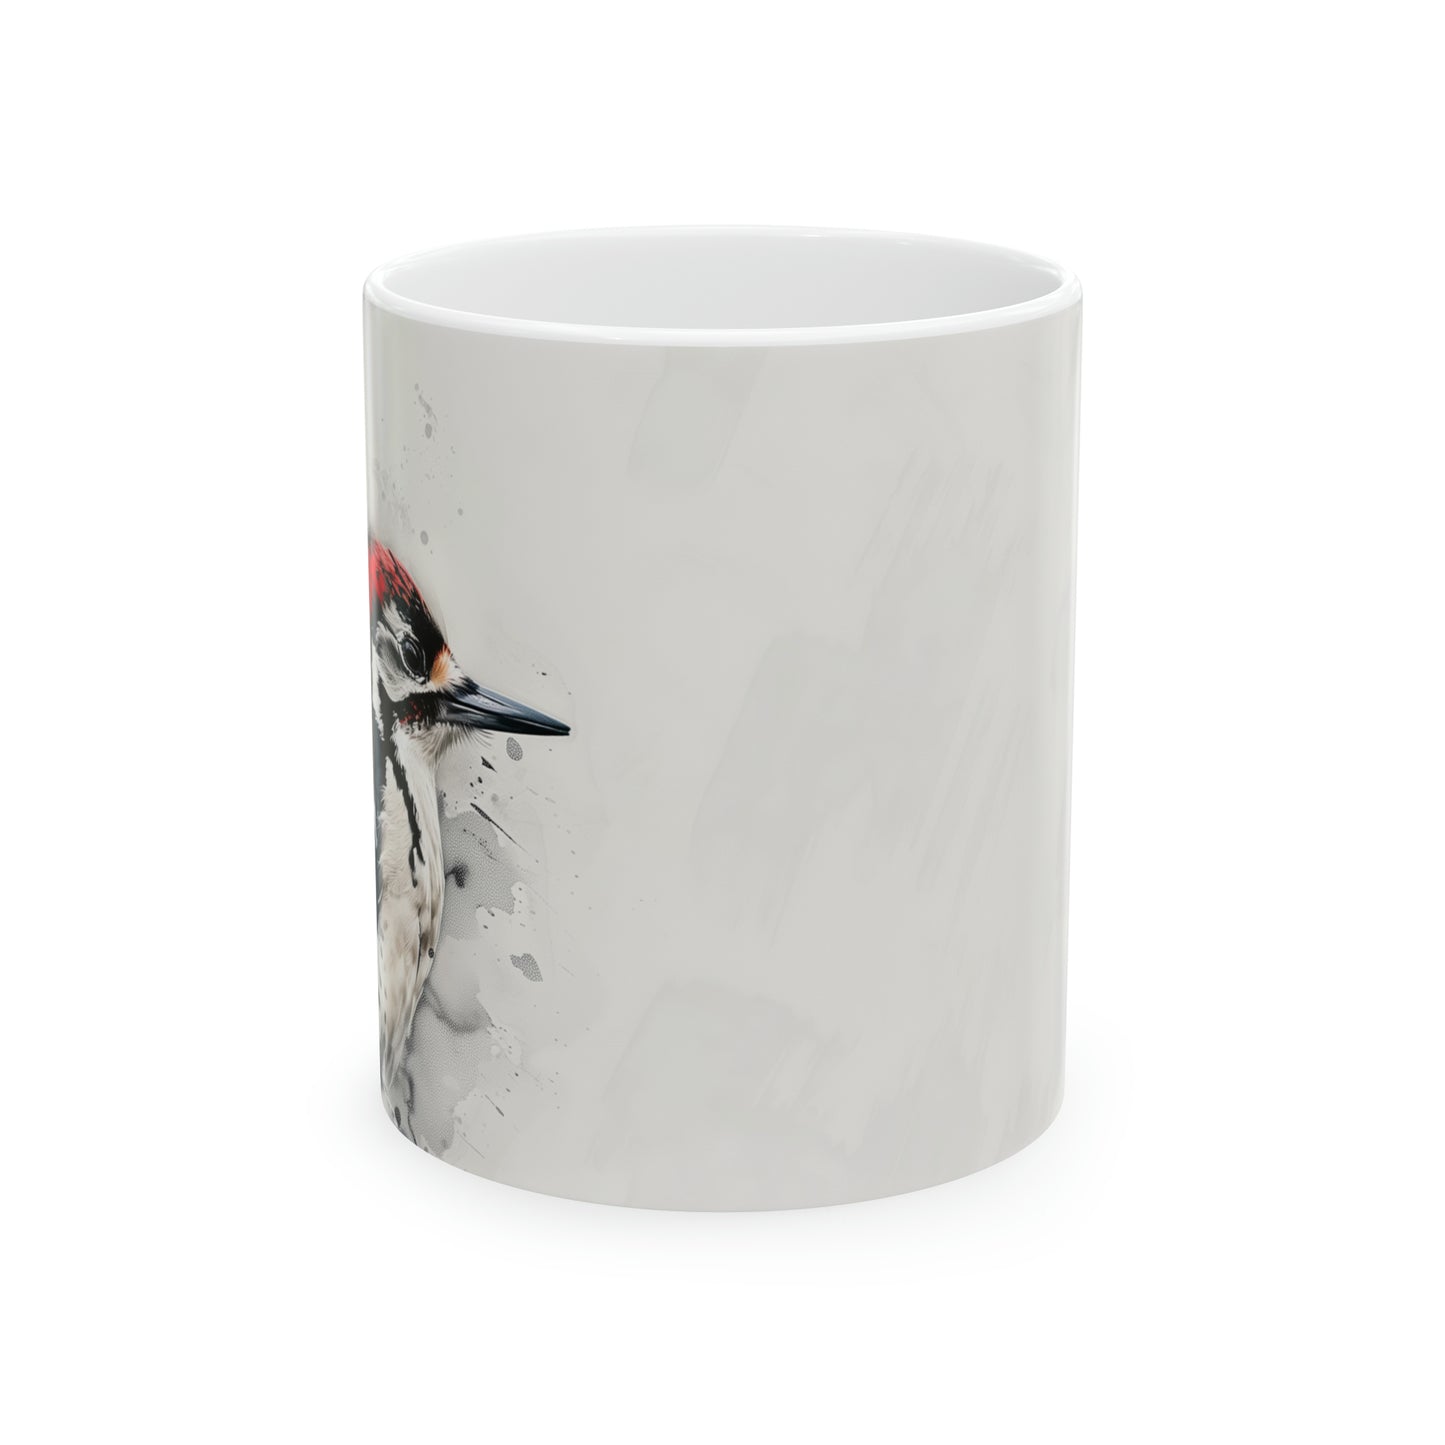 Woodpecker, Ceramic Mug - 11 oz, Watercolor